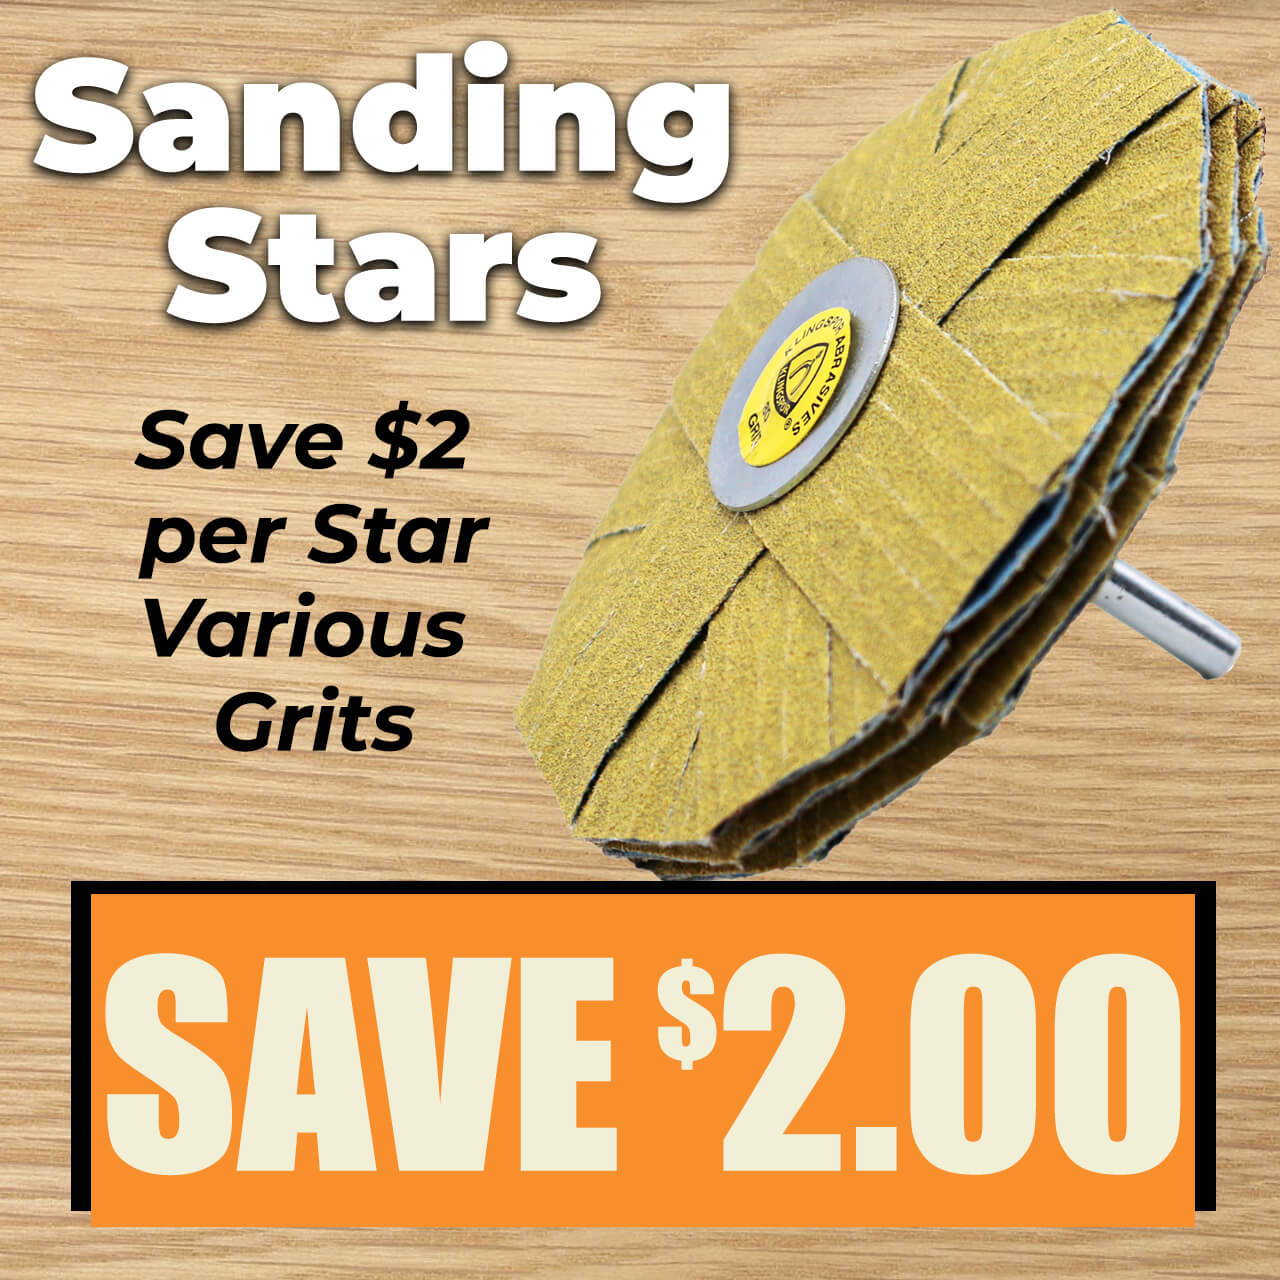 Sanding Stars Save $2